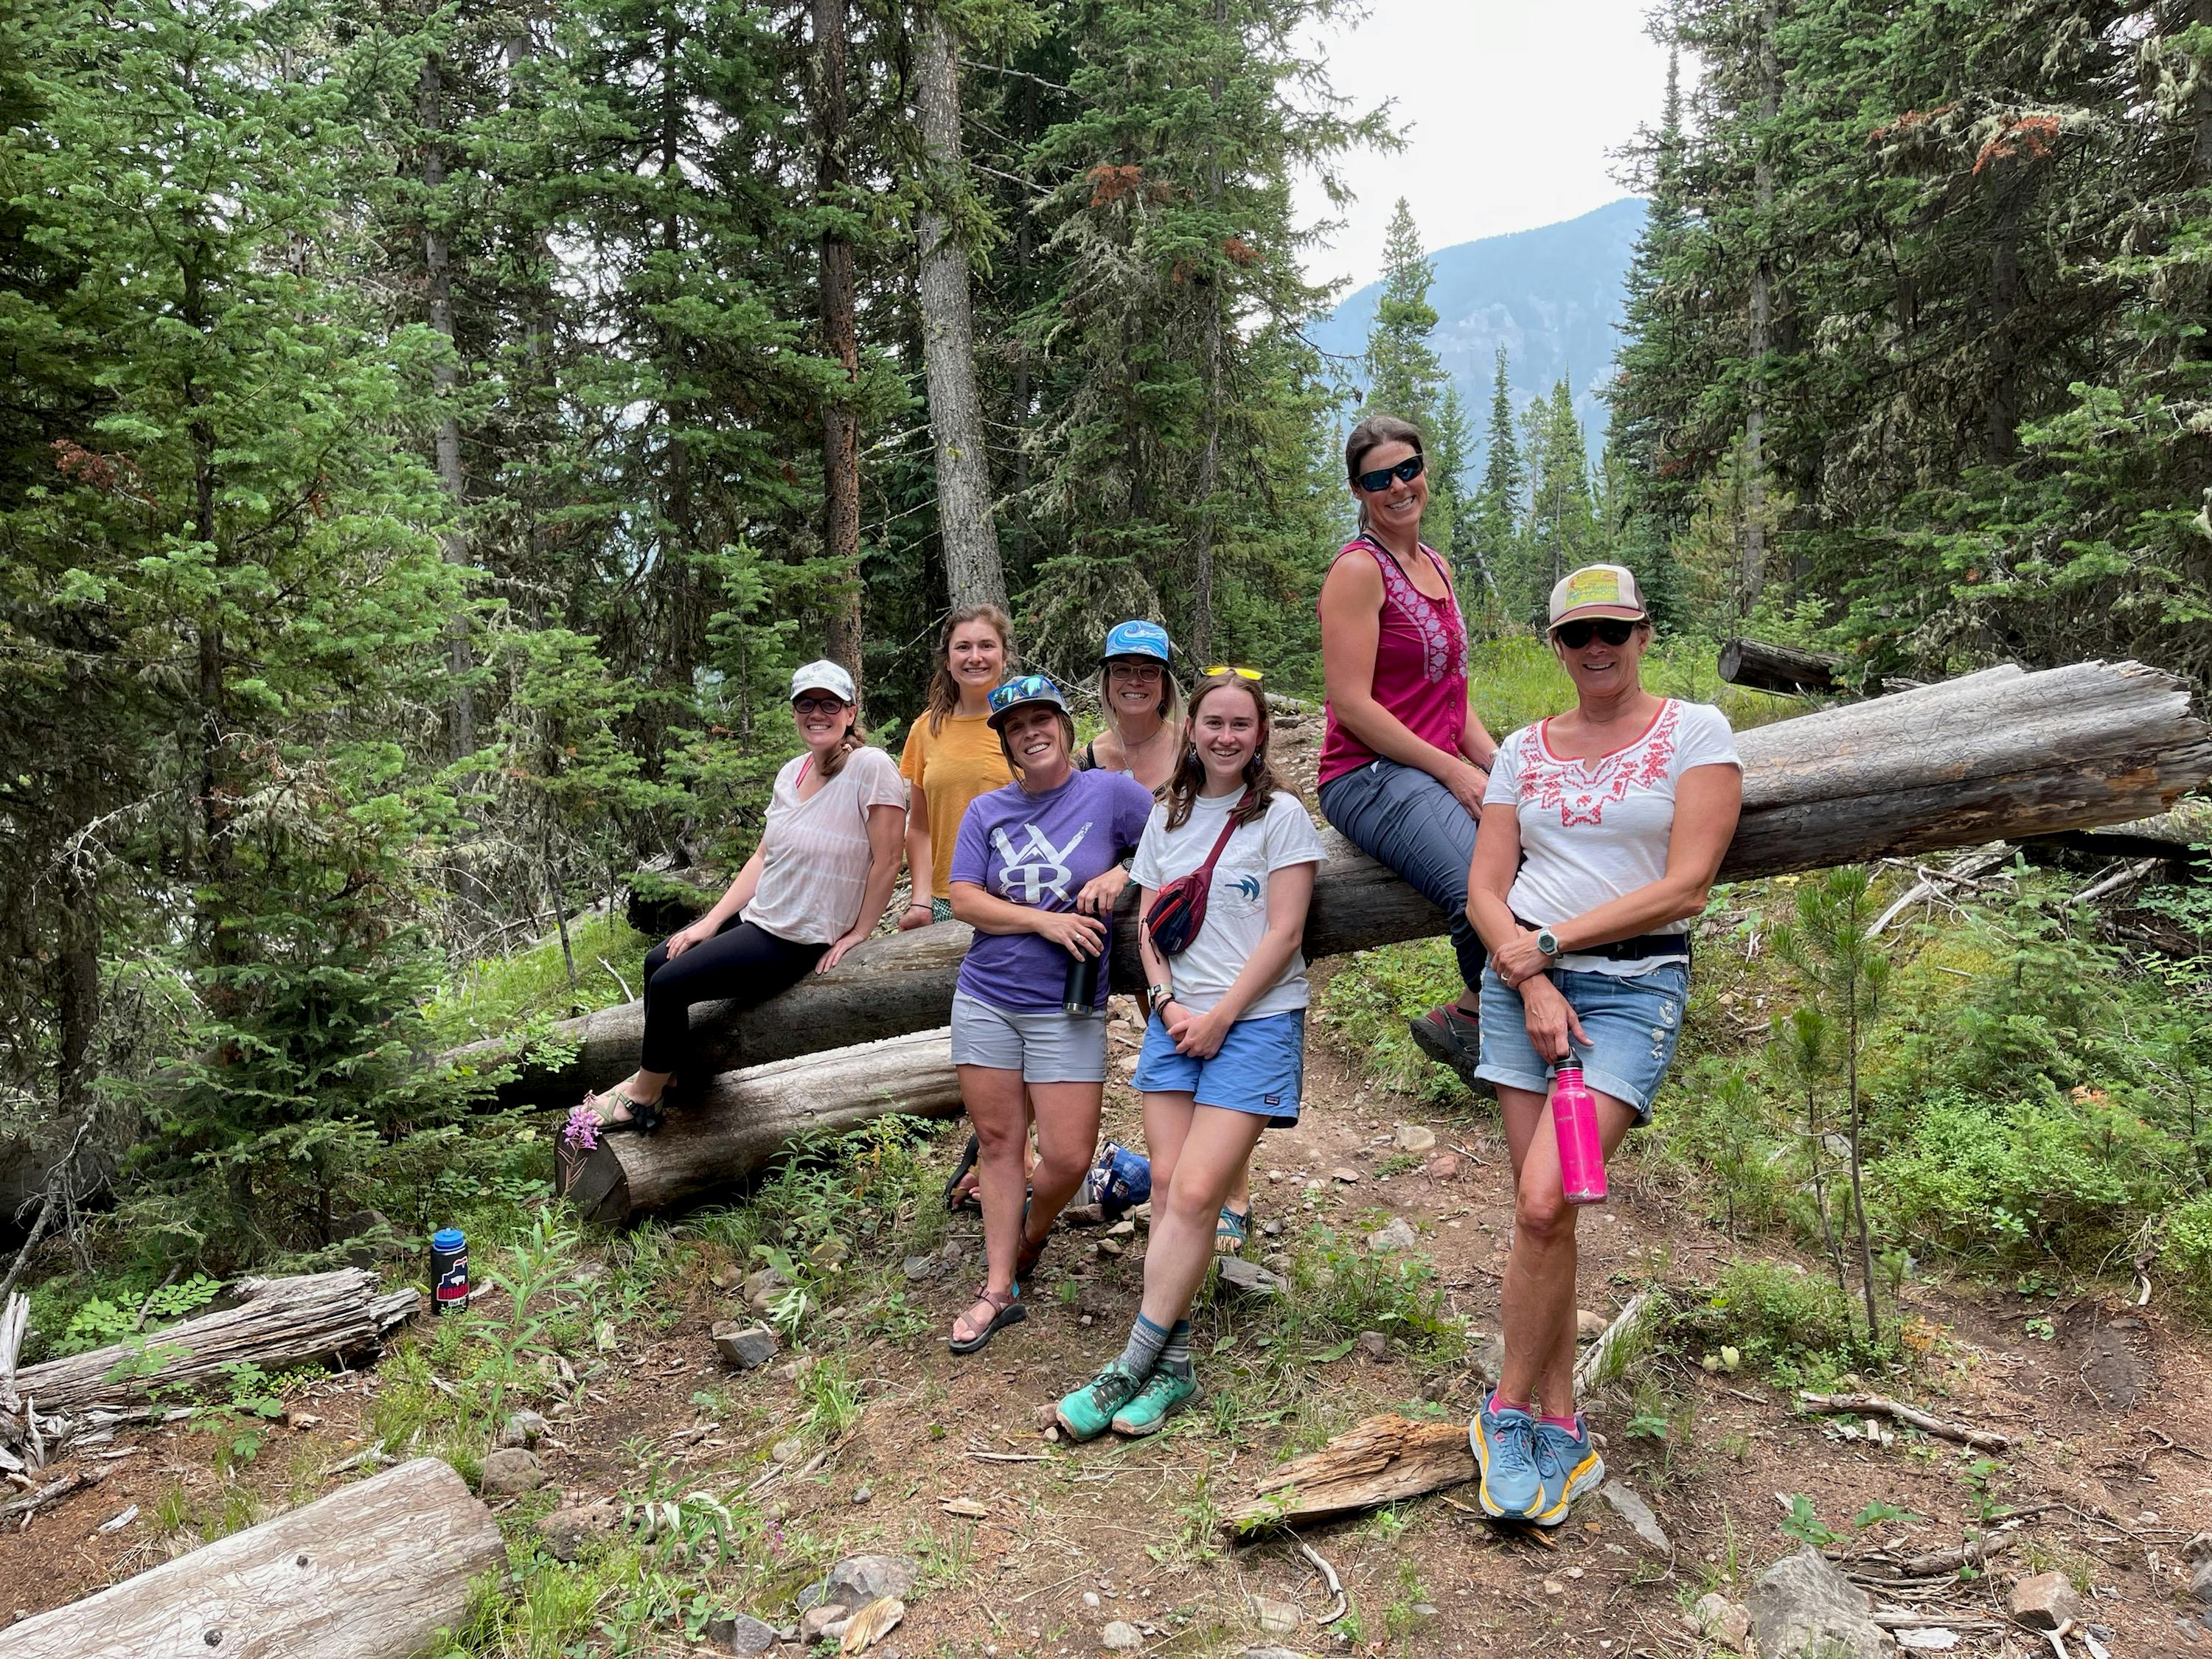 Girl members of The Traveling School in Bozeman enjoying the mountains in Montana.